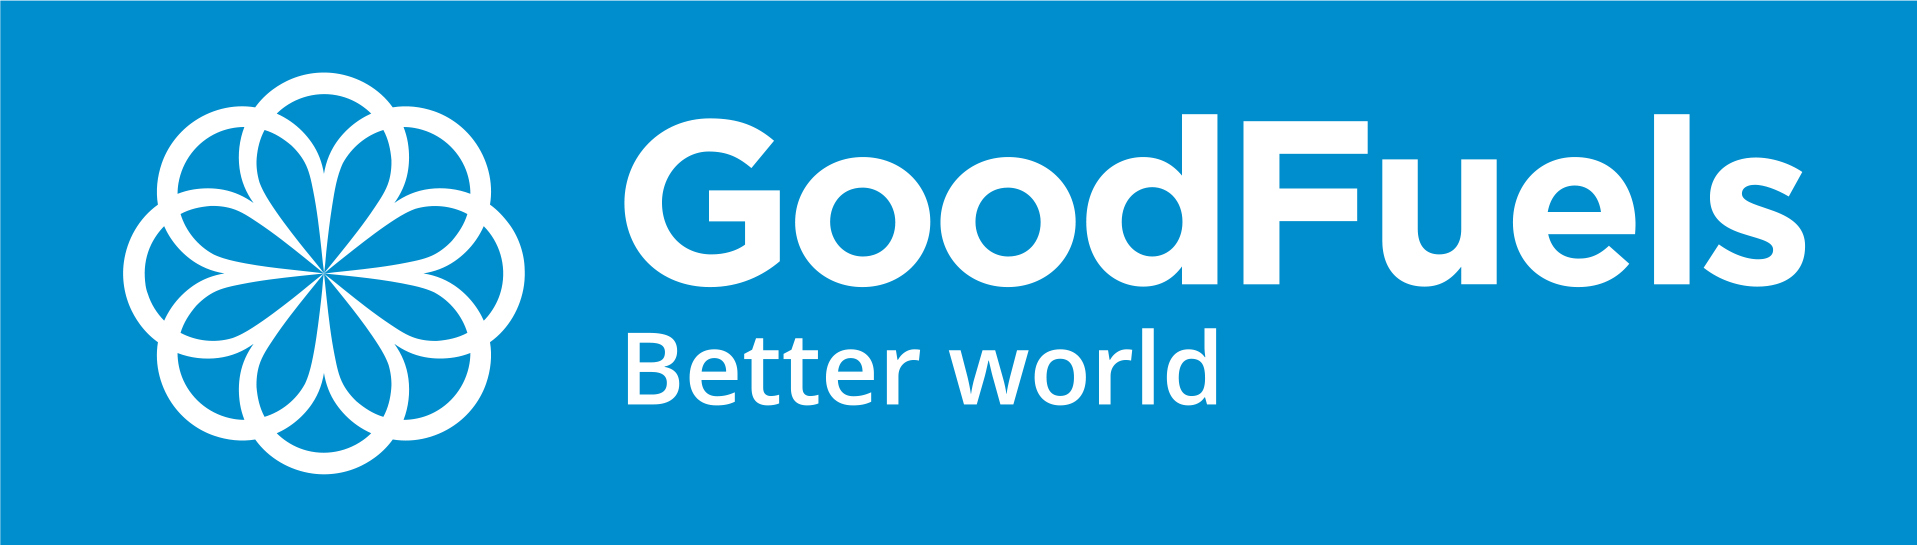 goodfuels logo wit op blauw vlak